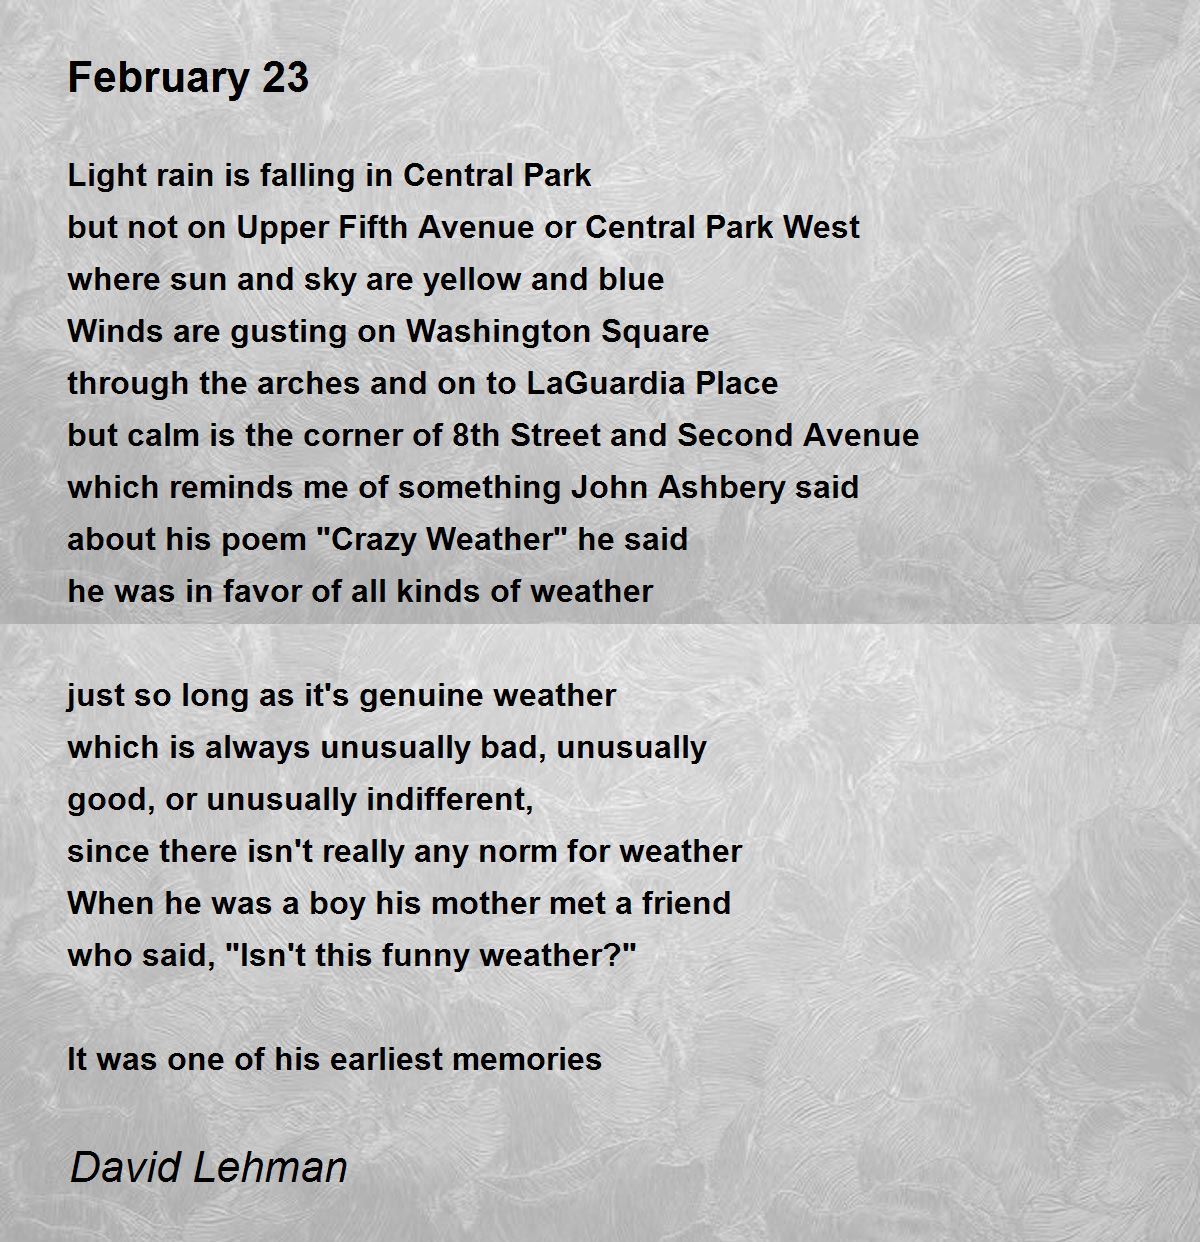 February 23 - February 23 Poem by David Lehman